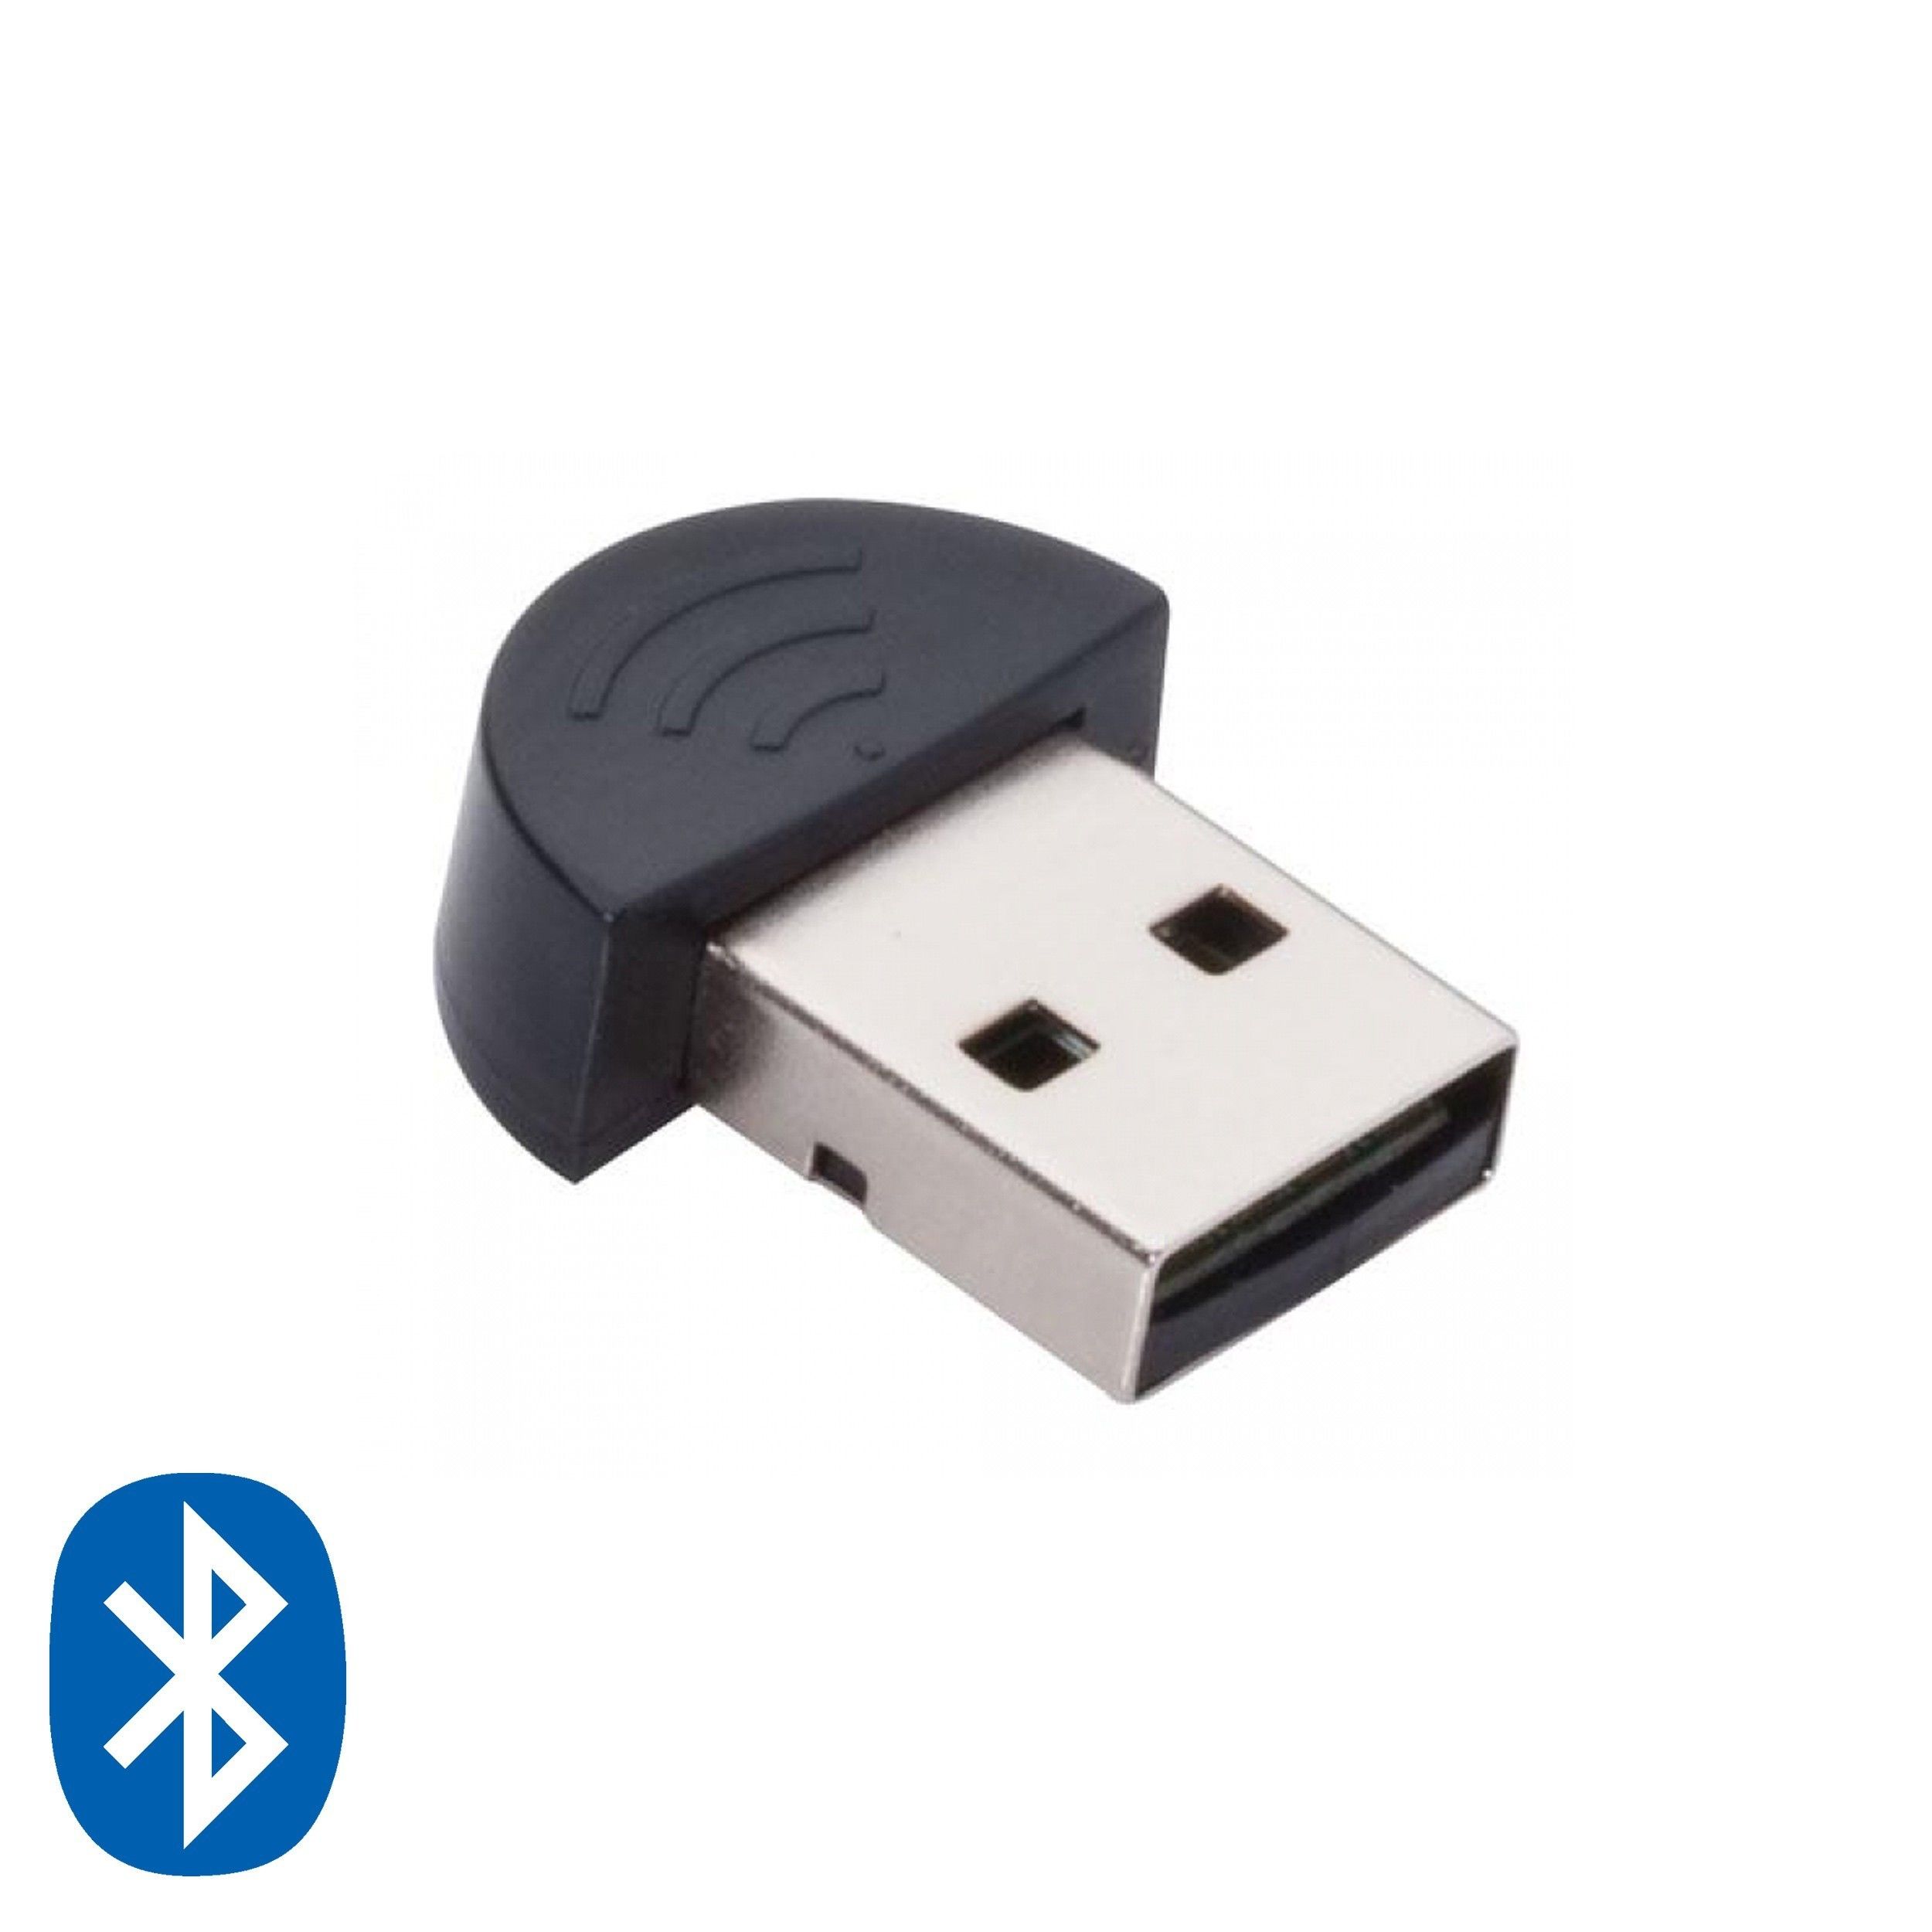 Usb bluetooth для автомагнитолы. USB Dongle Bluetooth 5.0. Мини USB Bluetooth адаптер v 2,0. Bluetooth адаптер USB a4034. USB Dongle Bluetooth 5.0 для магнитолы.